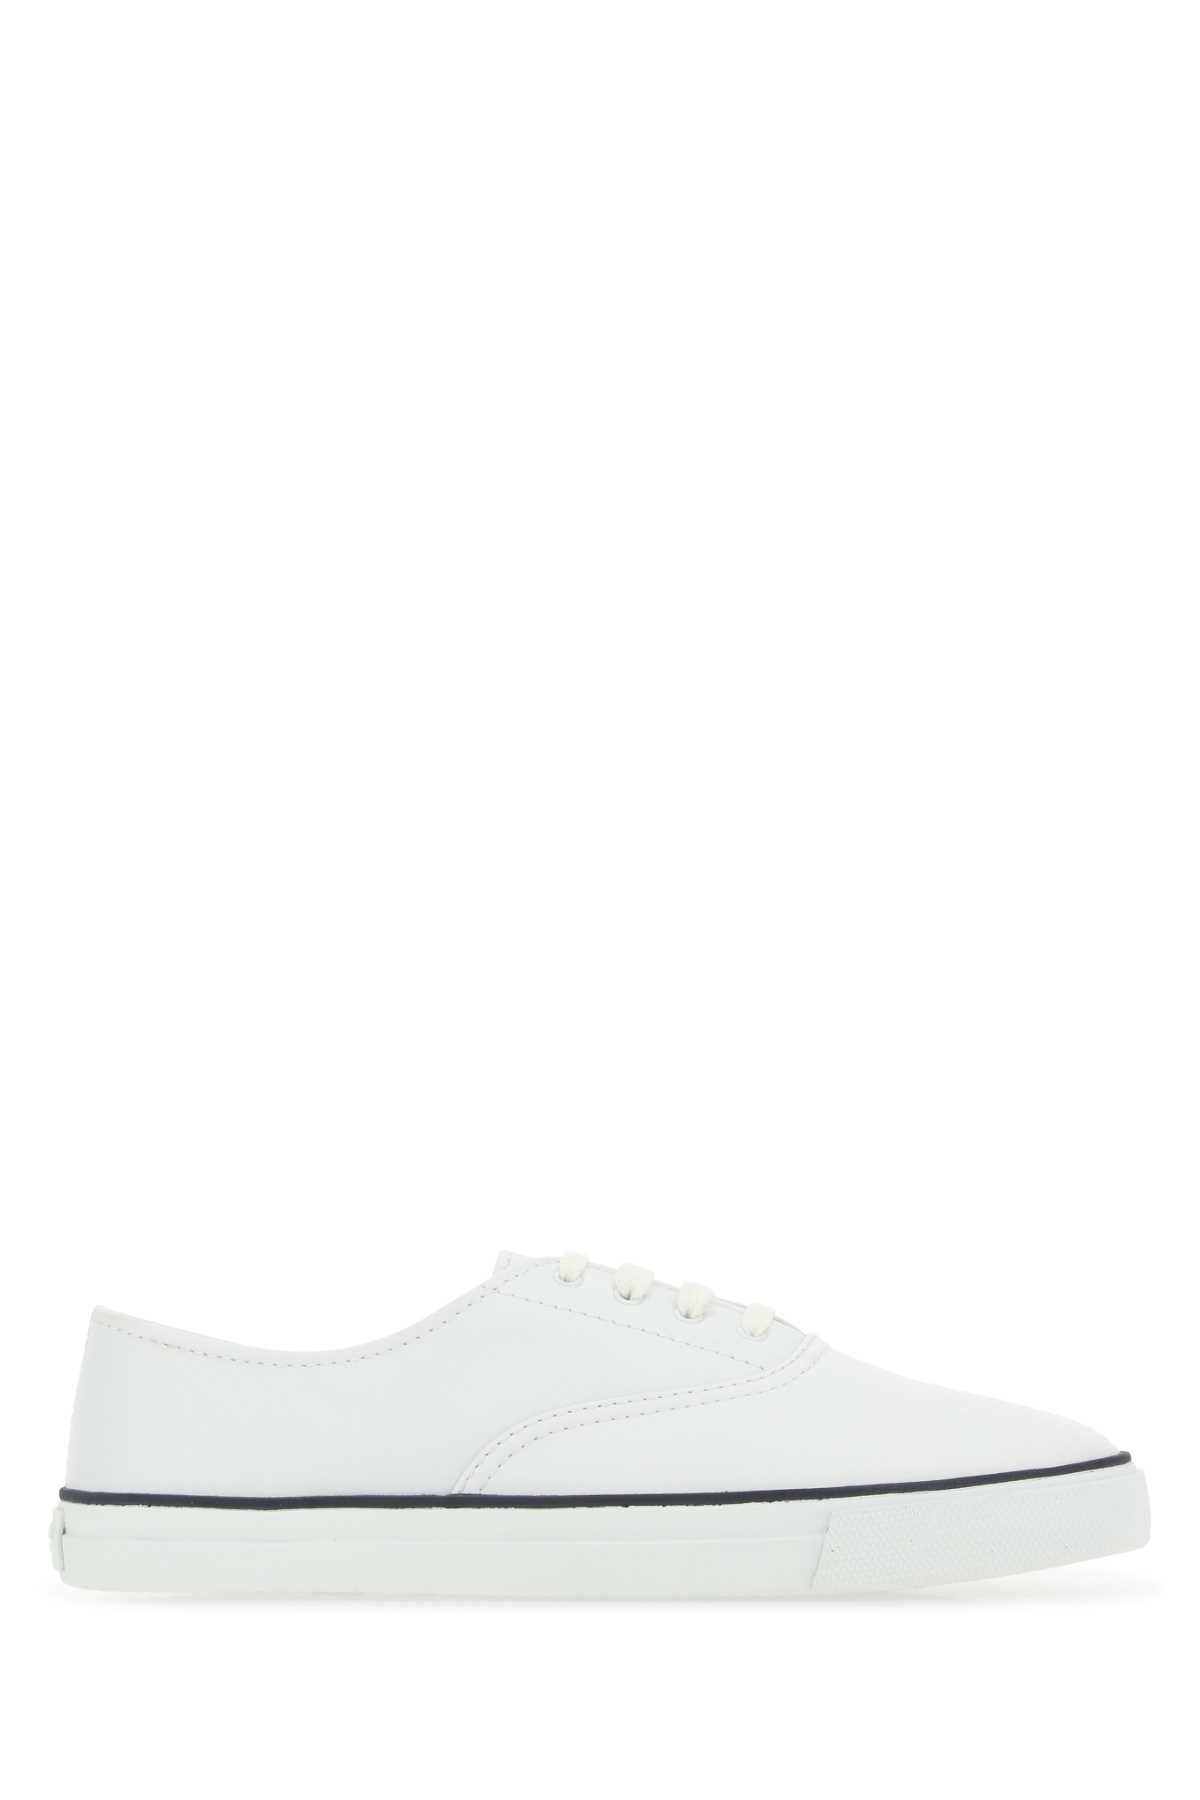 Saint Laurent White Leather Tandem Sneakers